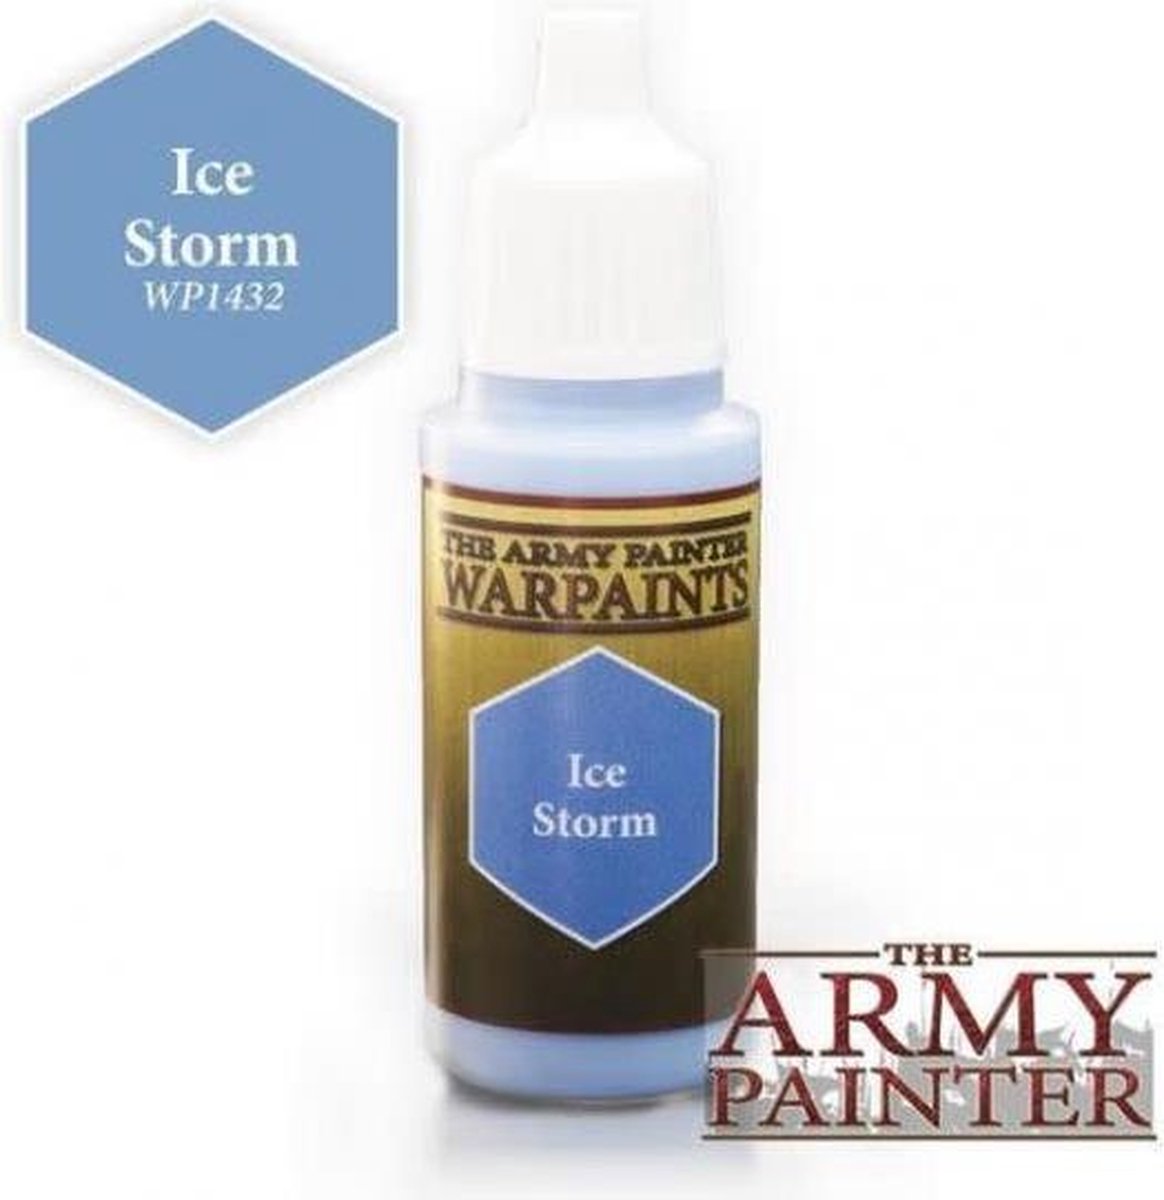 Army Painter Warpaints - Ice Storm